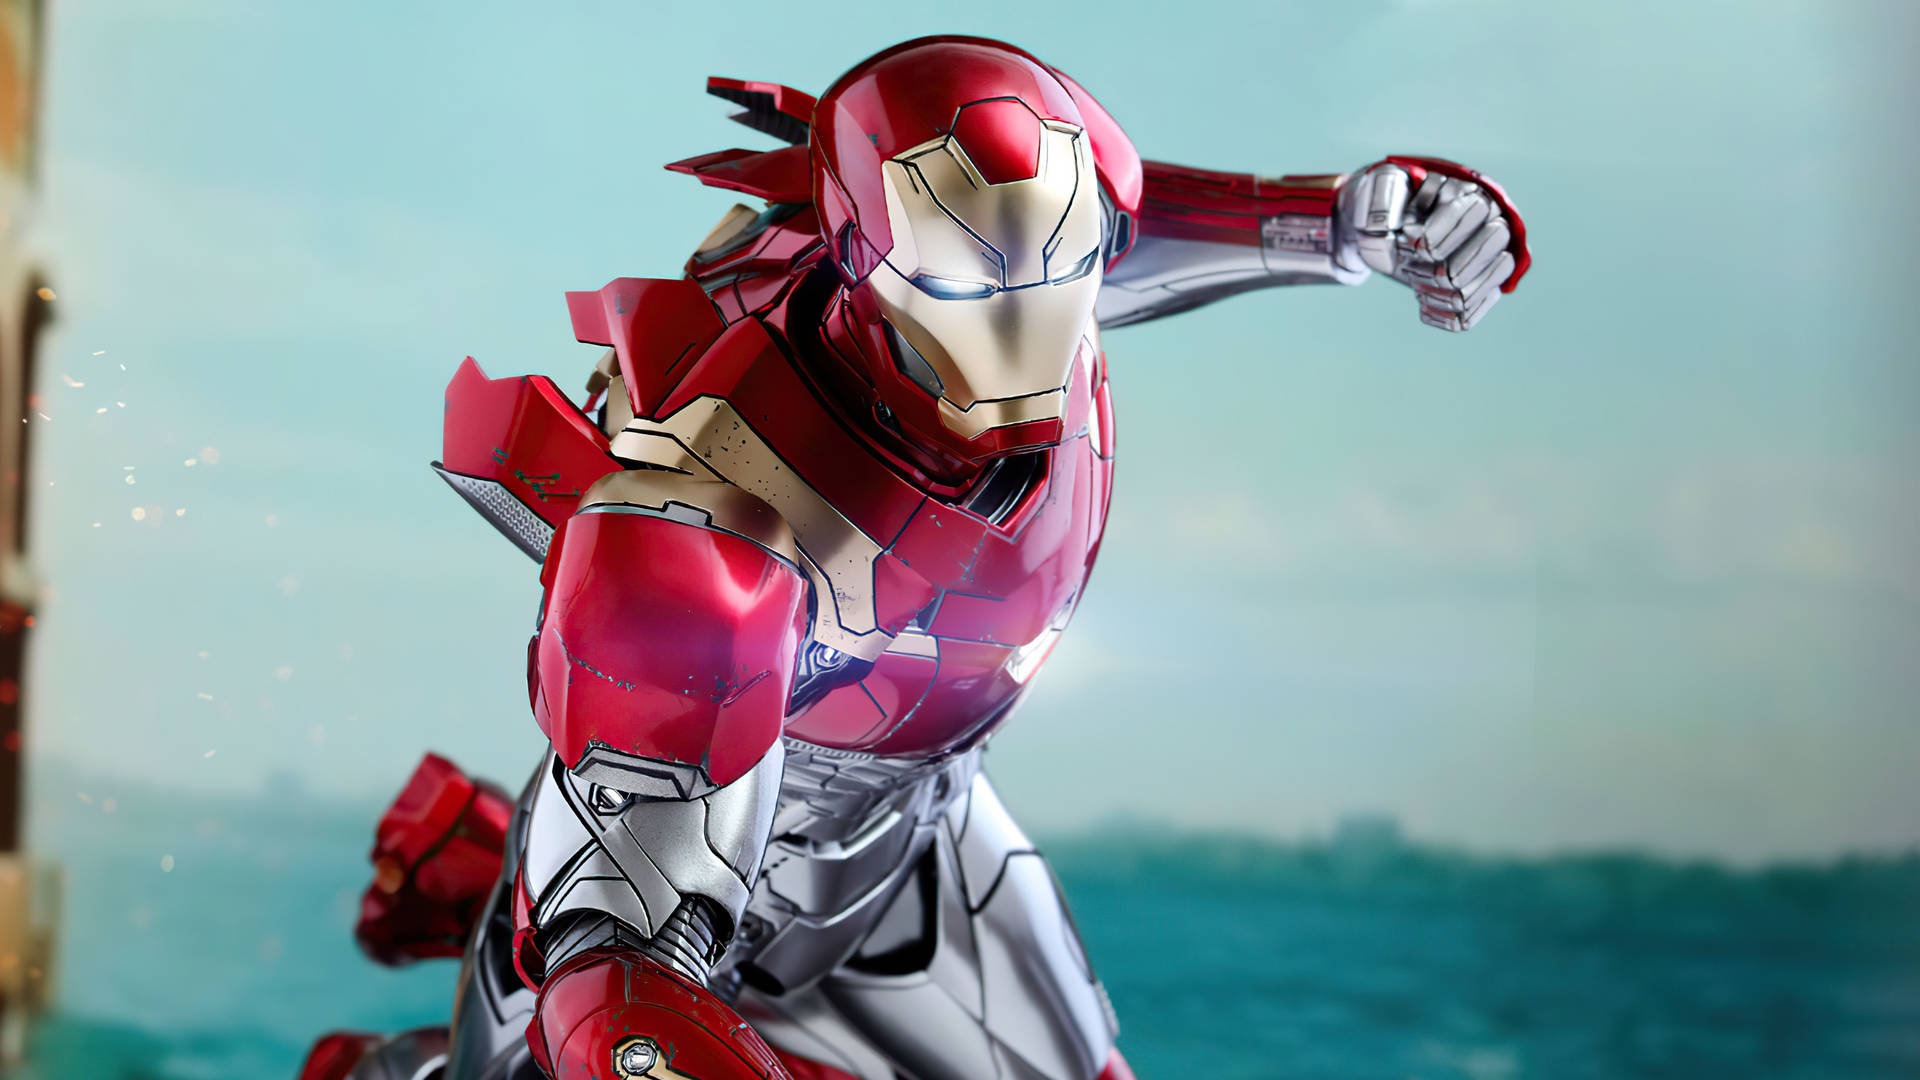 Superhero Iron Man Collectible Toy Figure Wallpaper